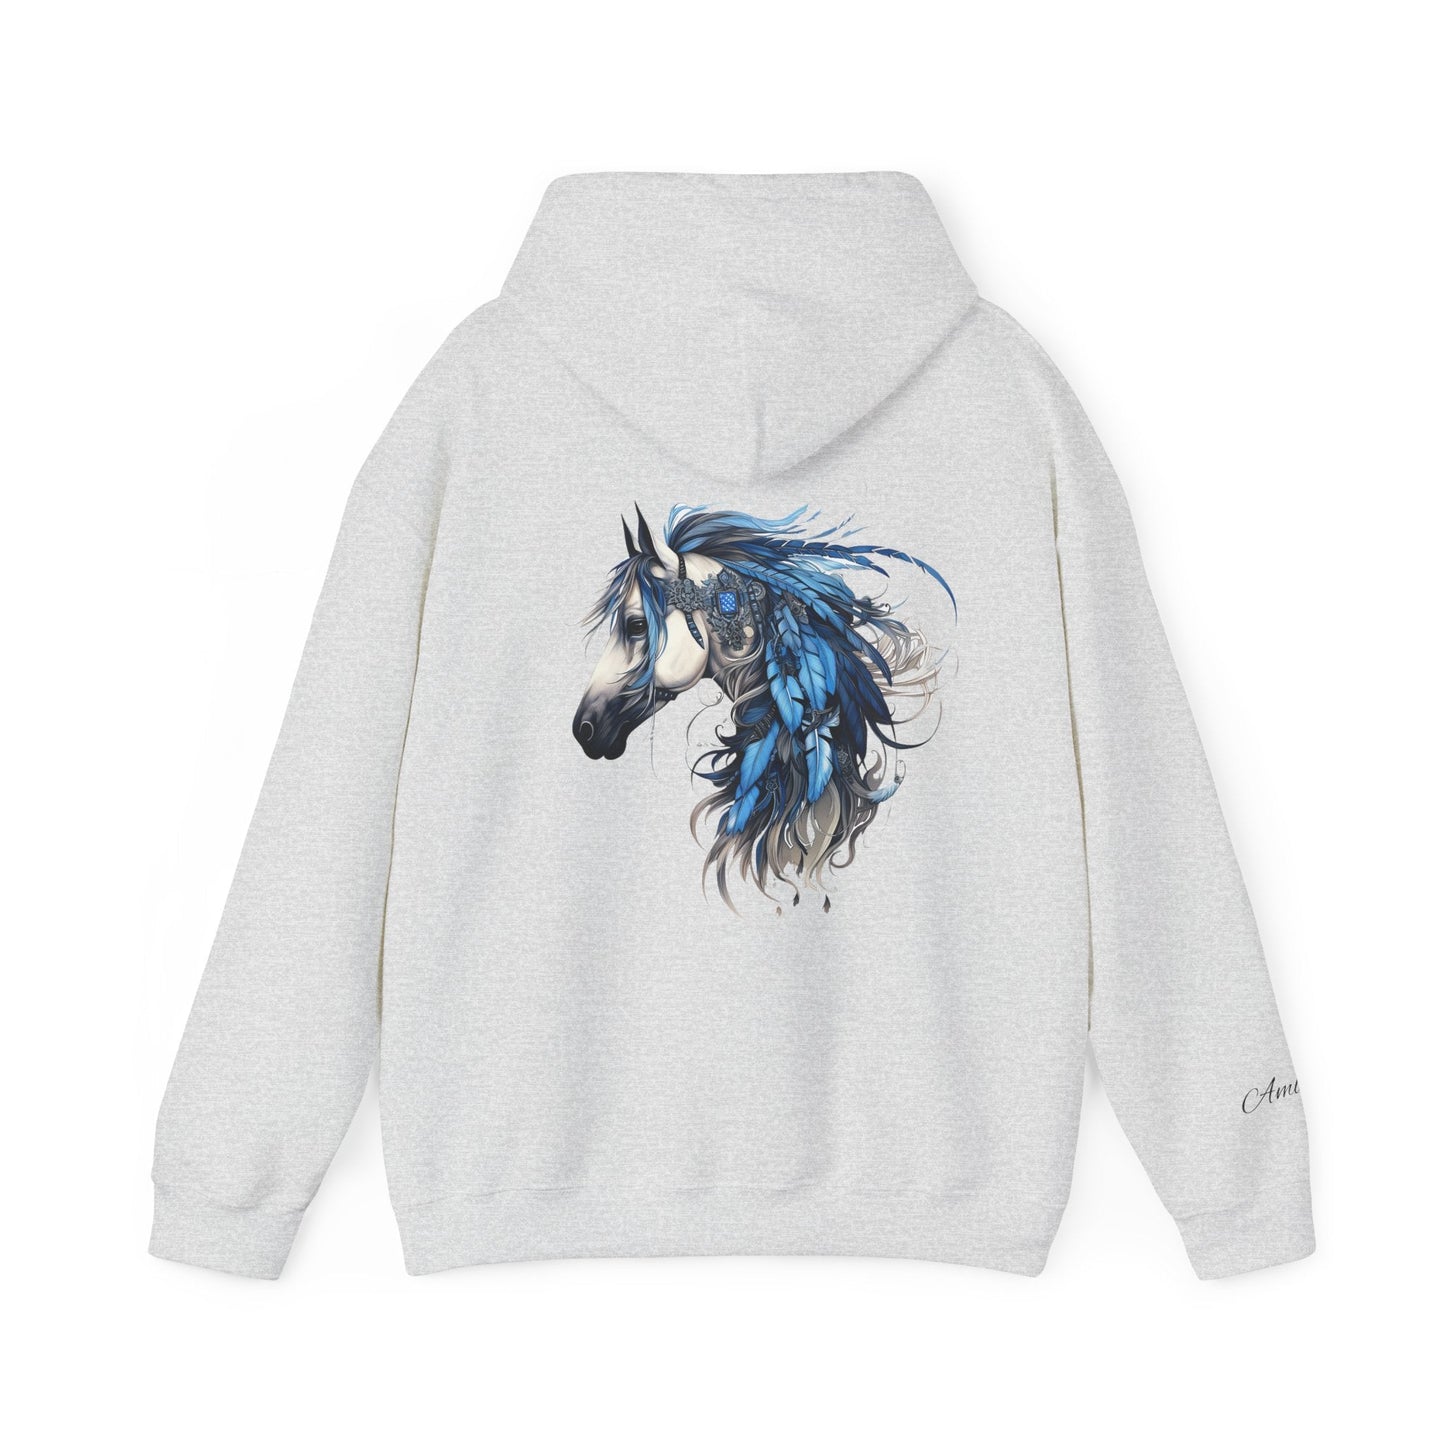 Horse Shirt, Hooded Sweatshirt Design, Horse and Feathers Shirt, Cowgirl Fashion - FlooredByArt